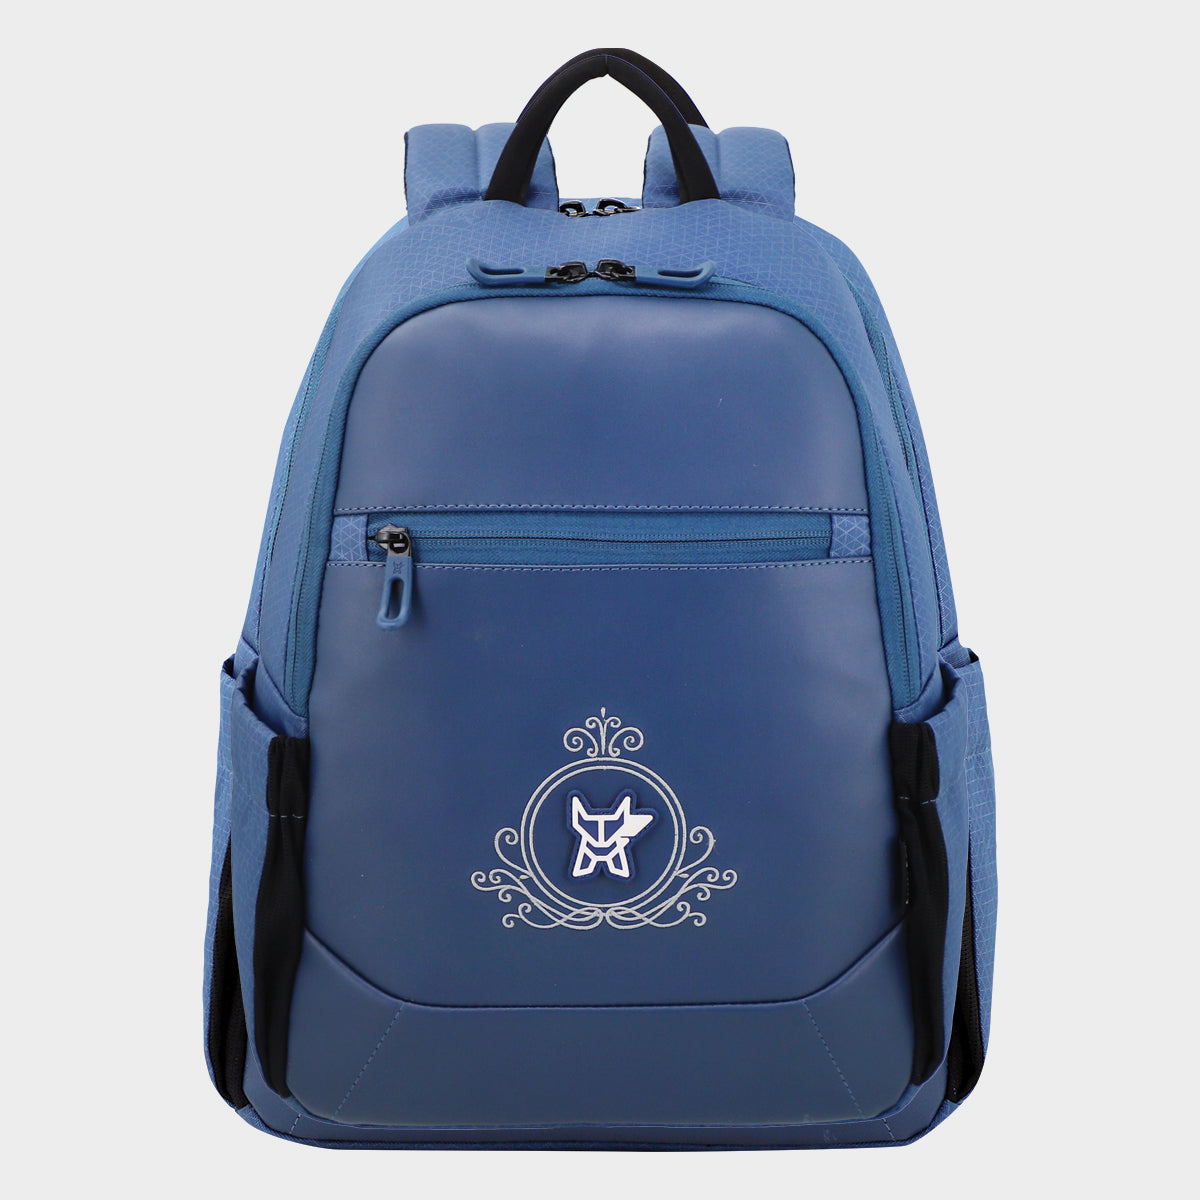 fcity.in - Bag For College Bags Bag School Bag Backpack For School Bag